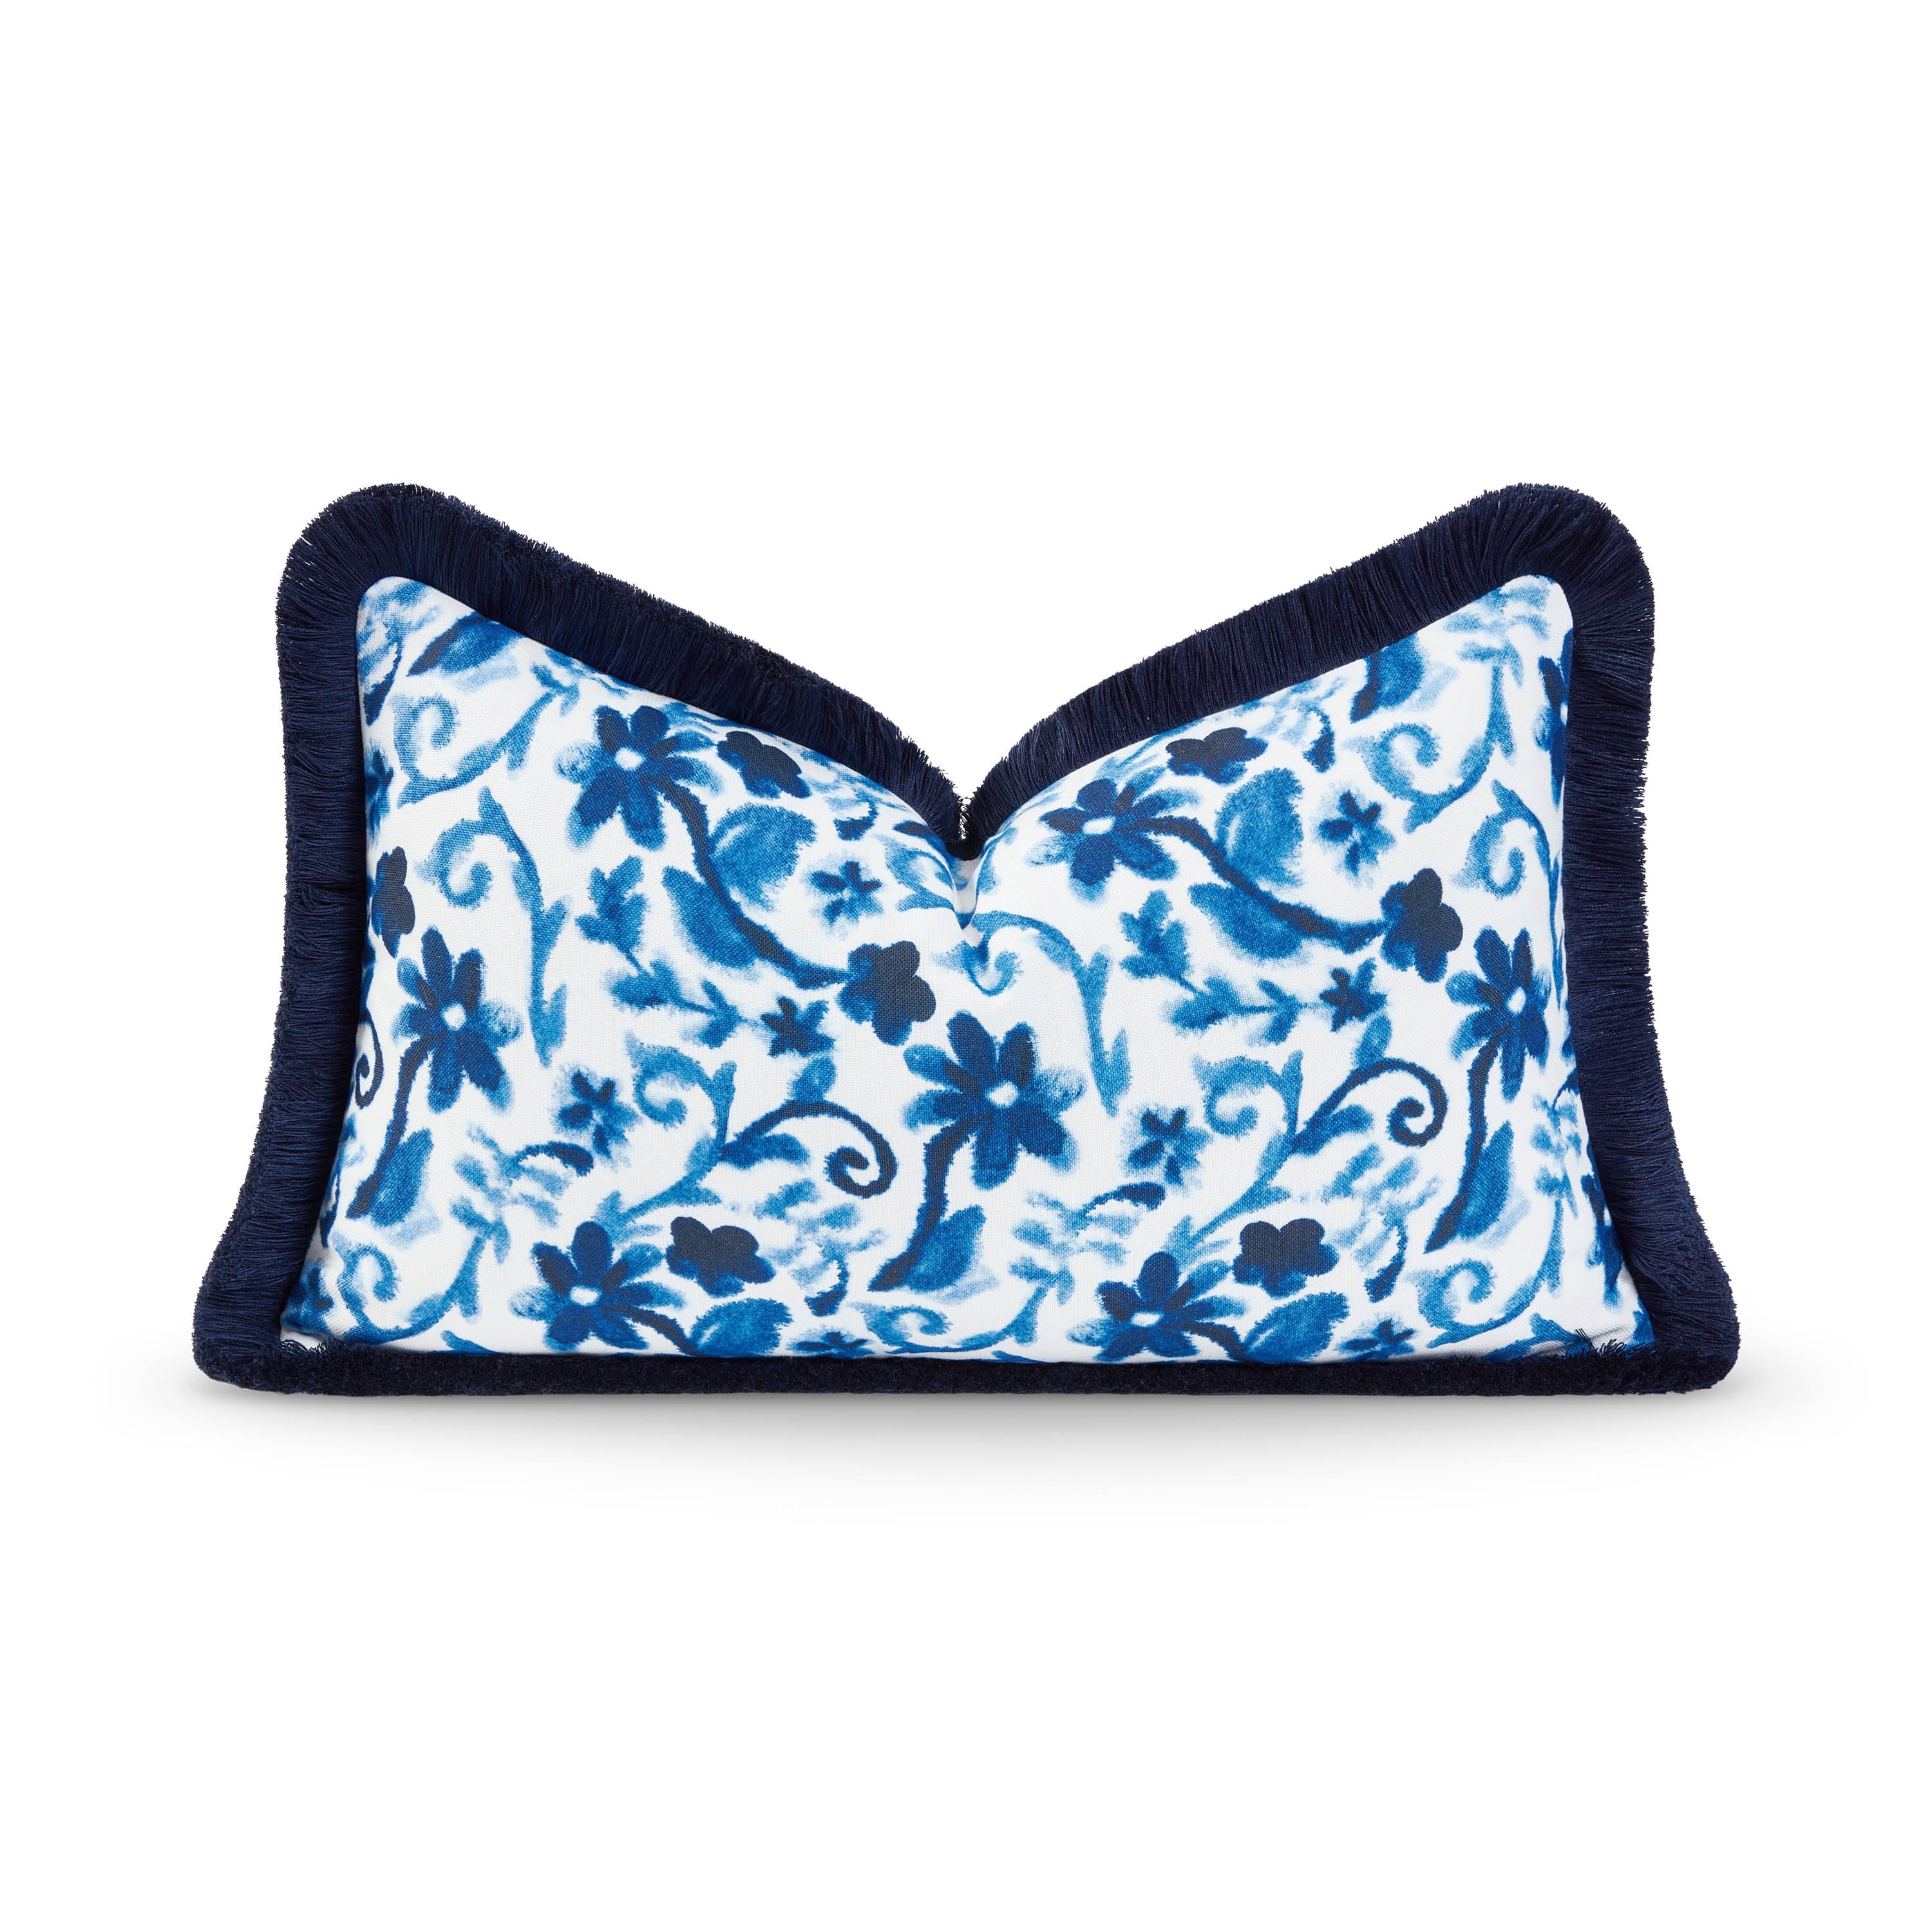 Coastal Hampton Style Indoor Outdoor Lumbar Pillow Cover, Floral Fringe, Navy Blue, 12"x20"